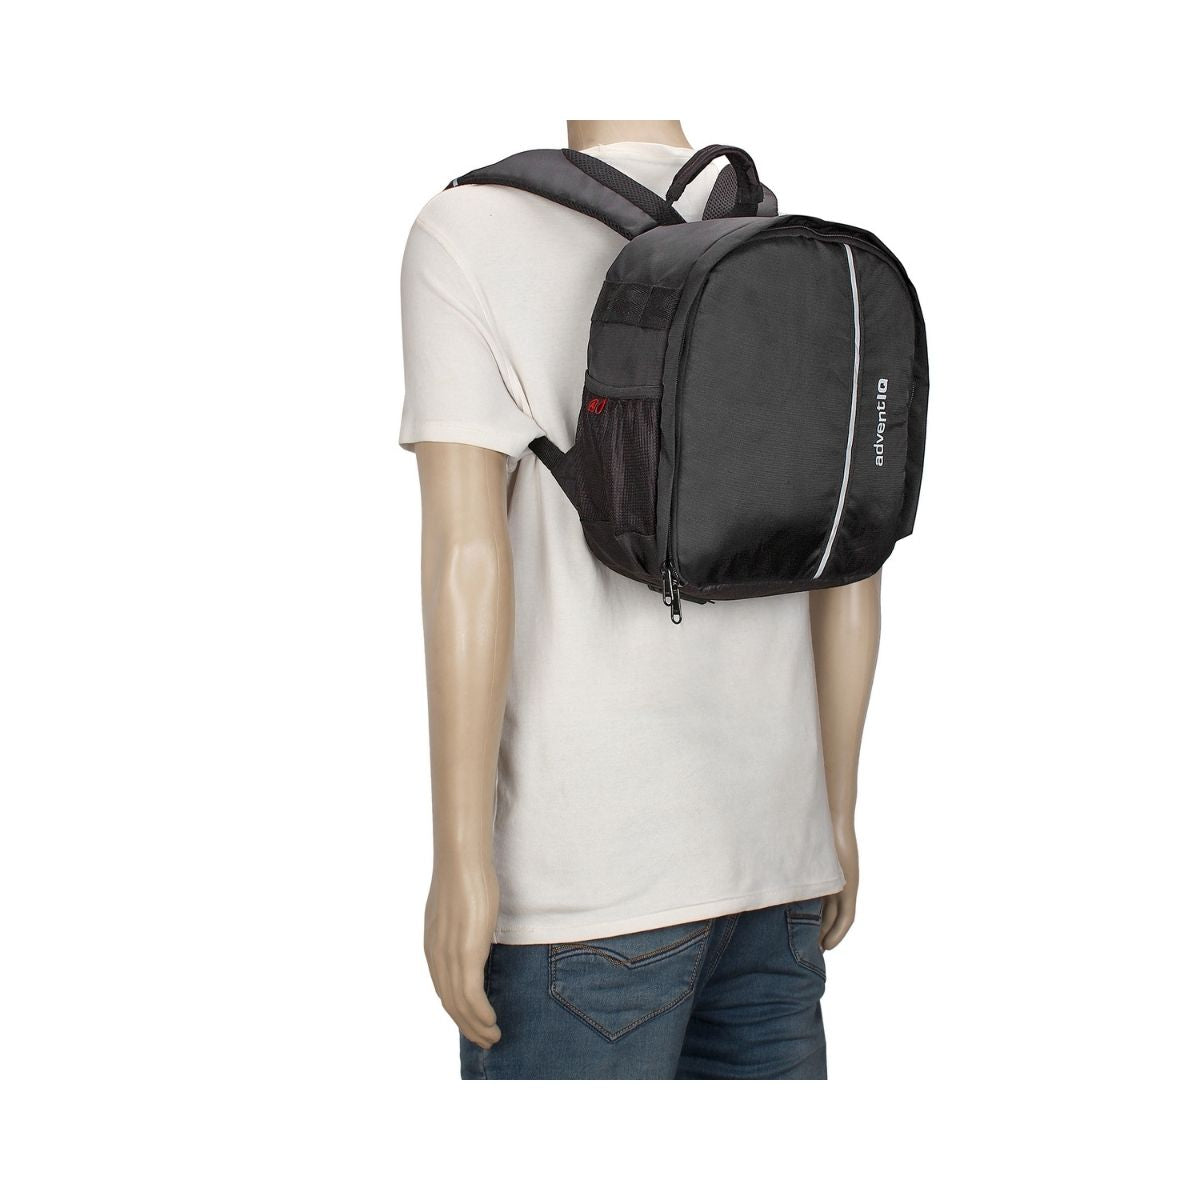 AdventIQ: DSLR / SLR Camera Backpack - Outdoor Travel Gear 8